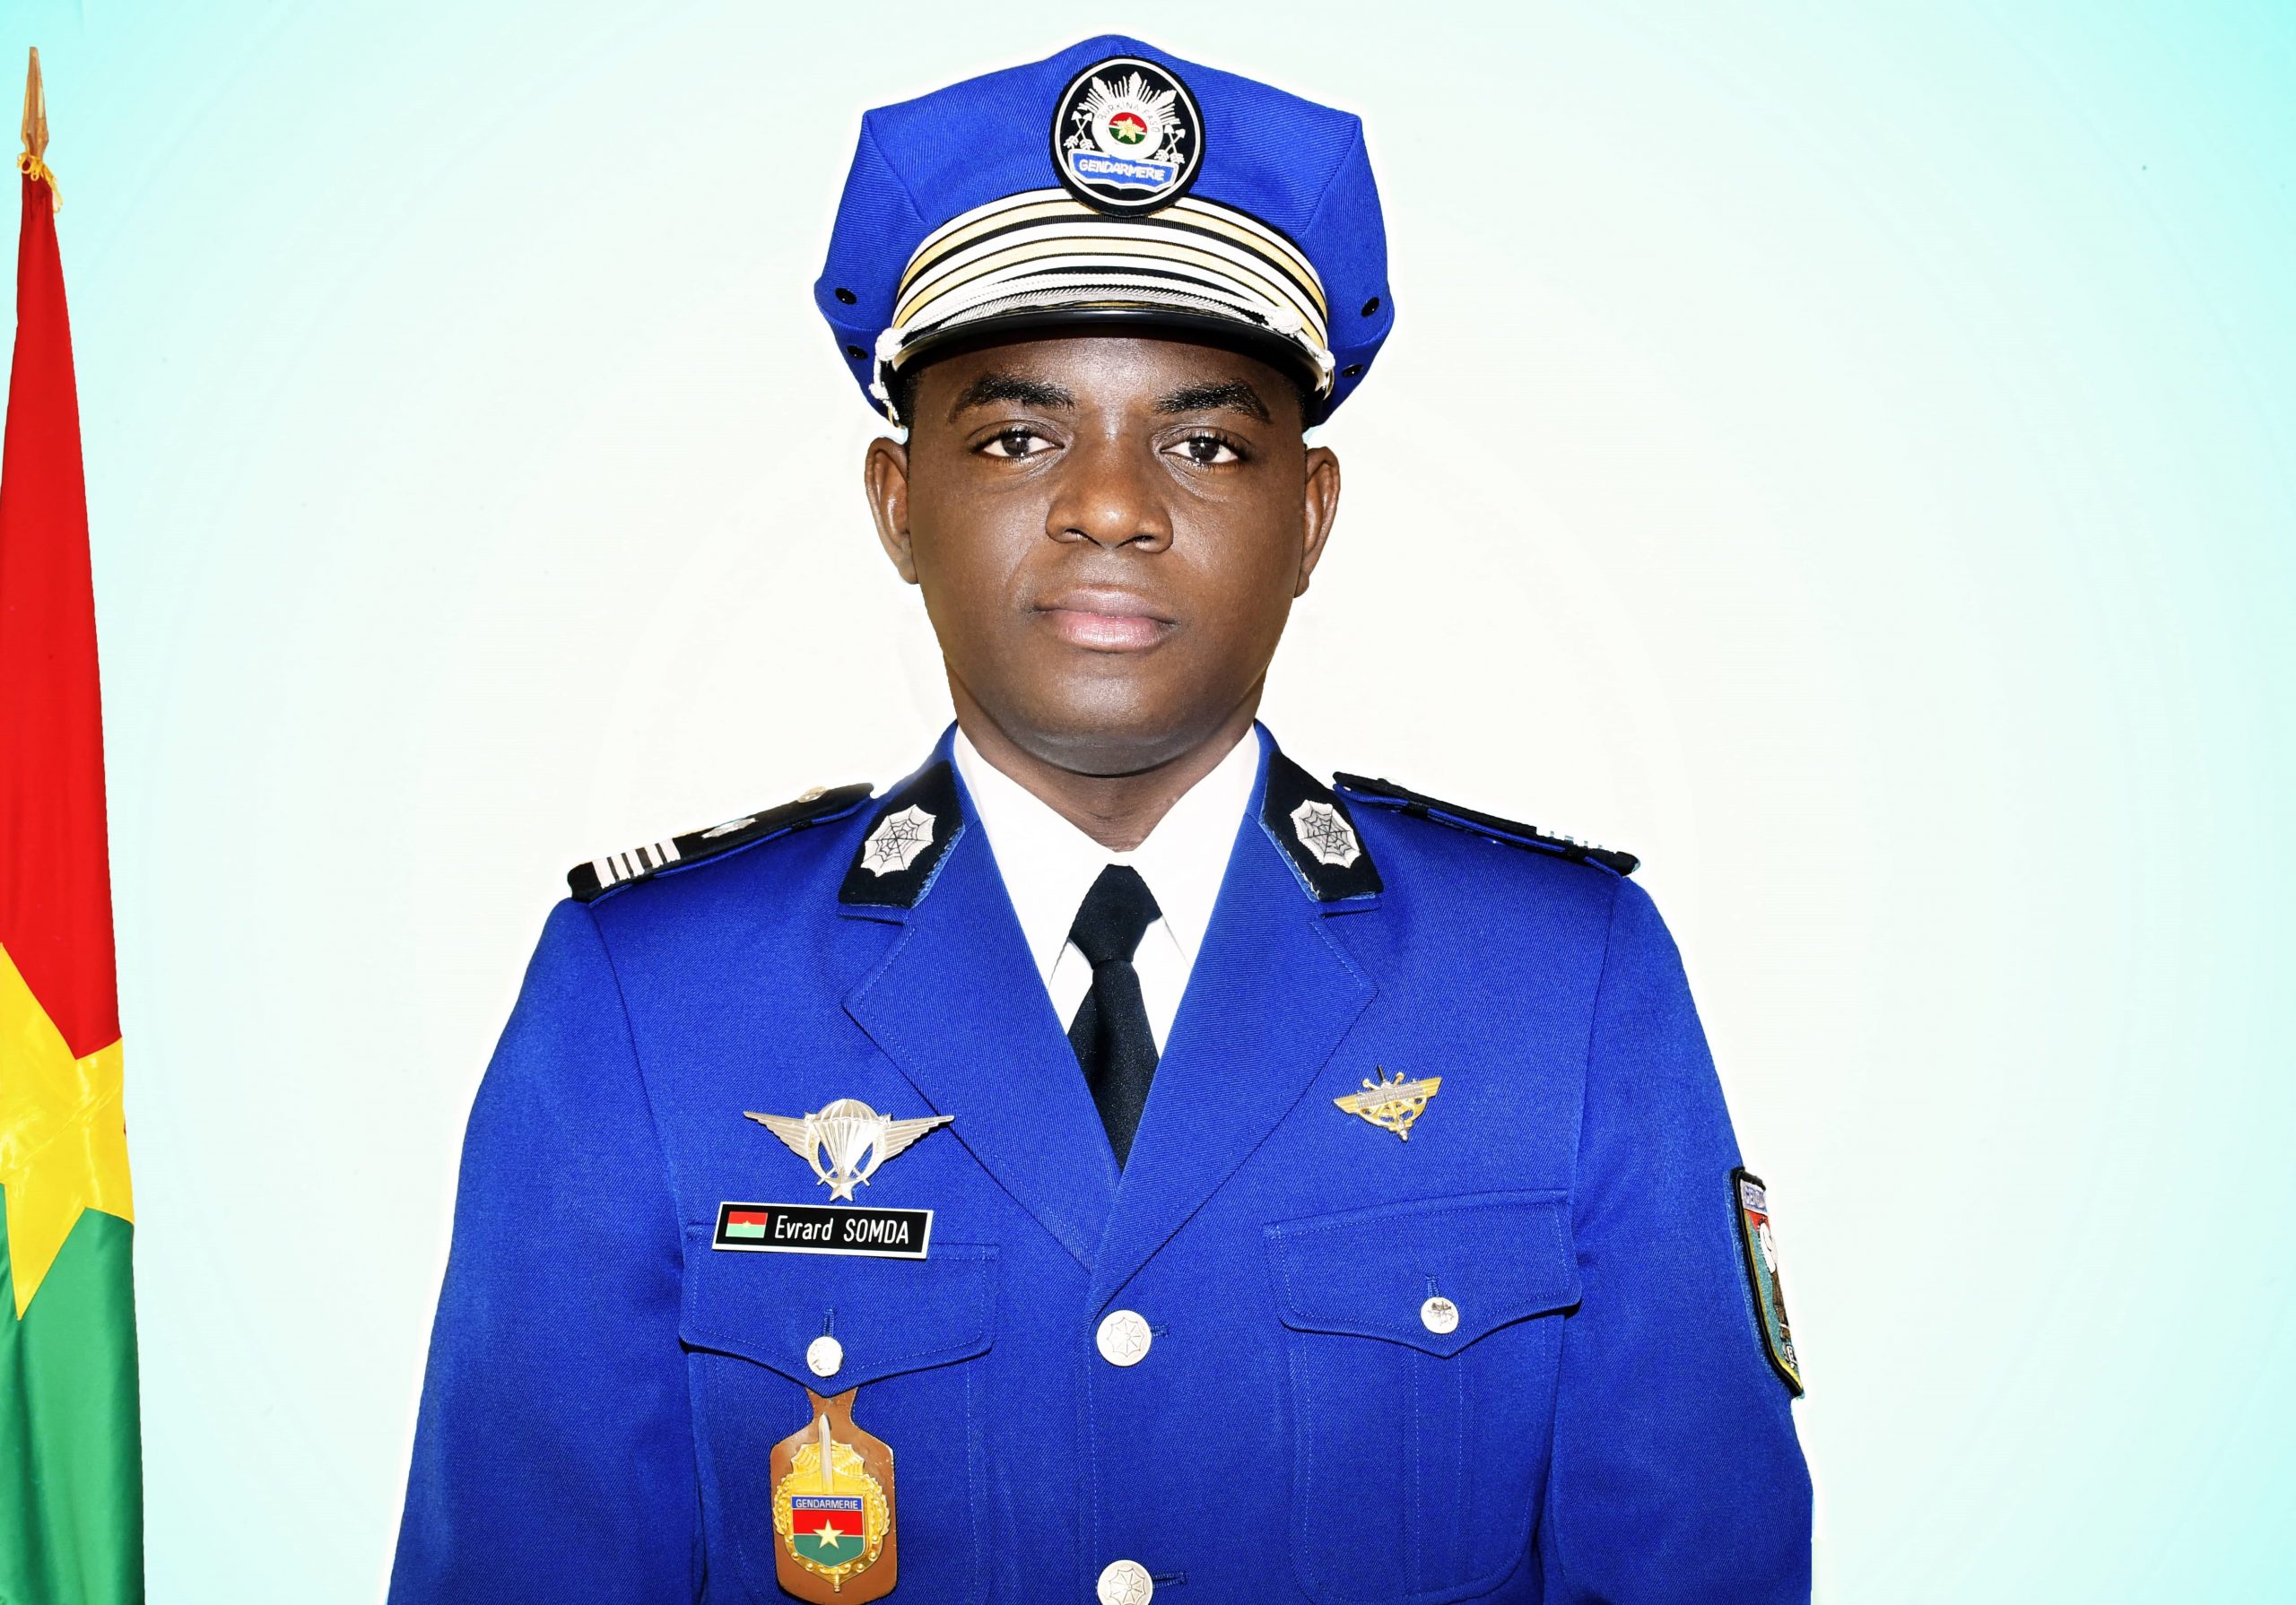 Le Lieutenant-Colonel Evrard SOMDA, Chef d'Etat-Major de la Gendarmerie Nationale du Burkina Faso